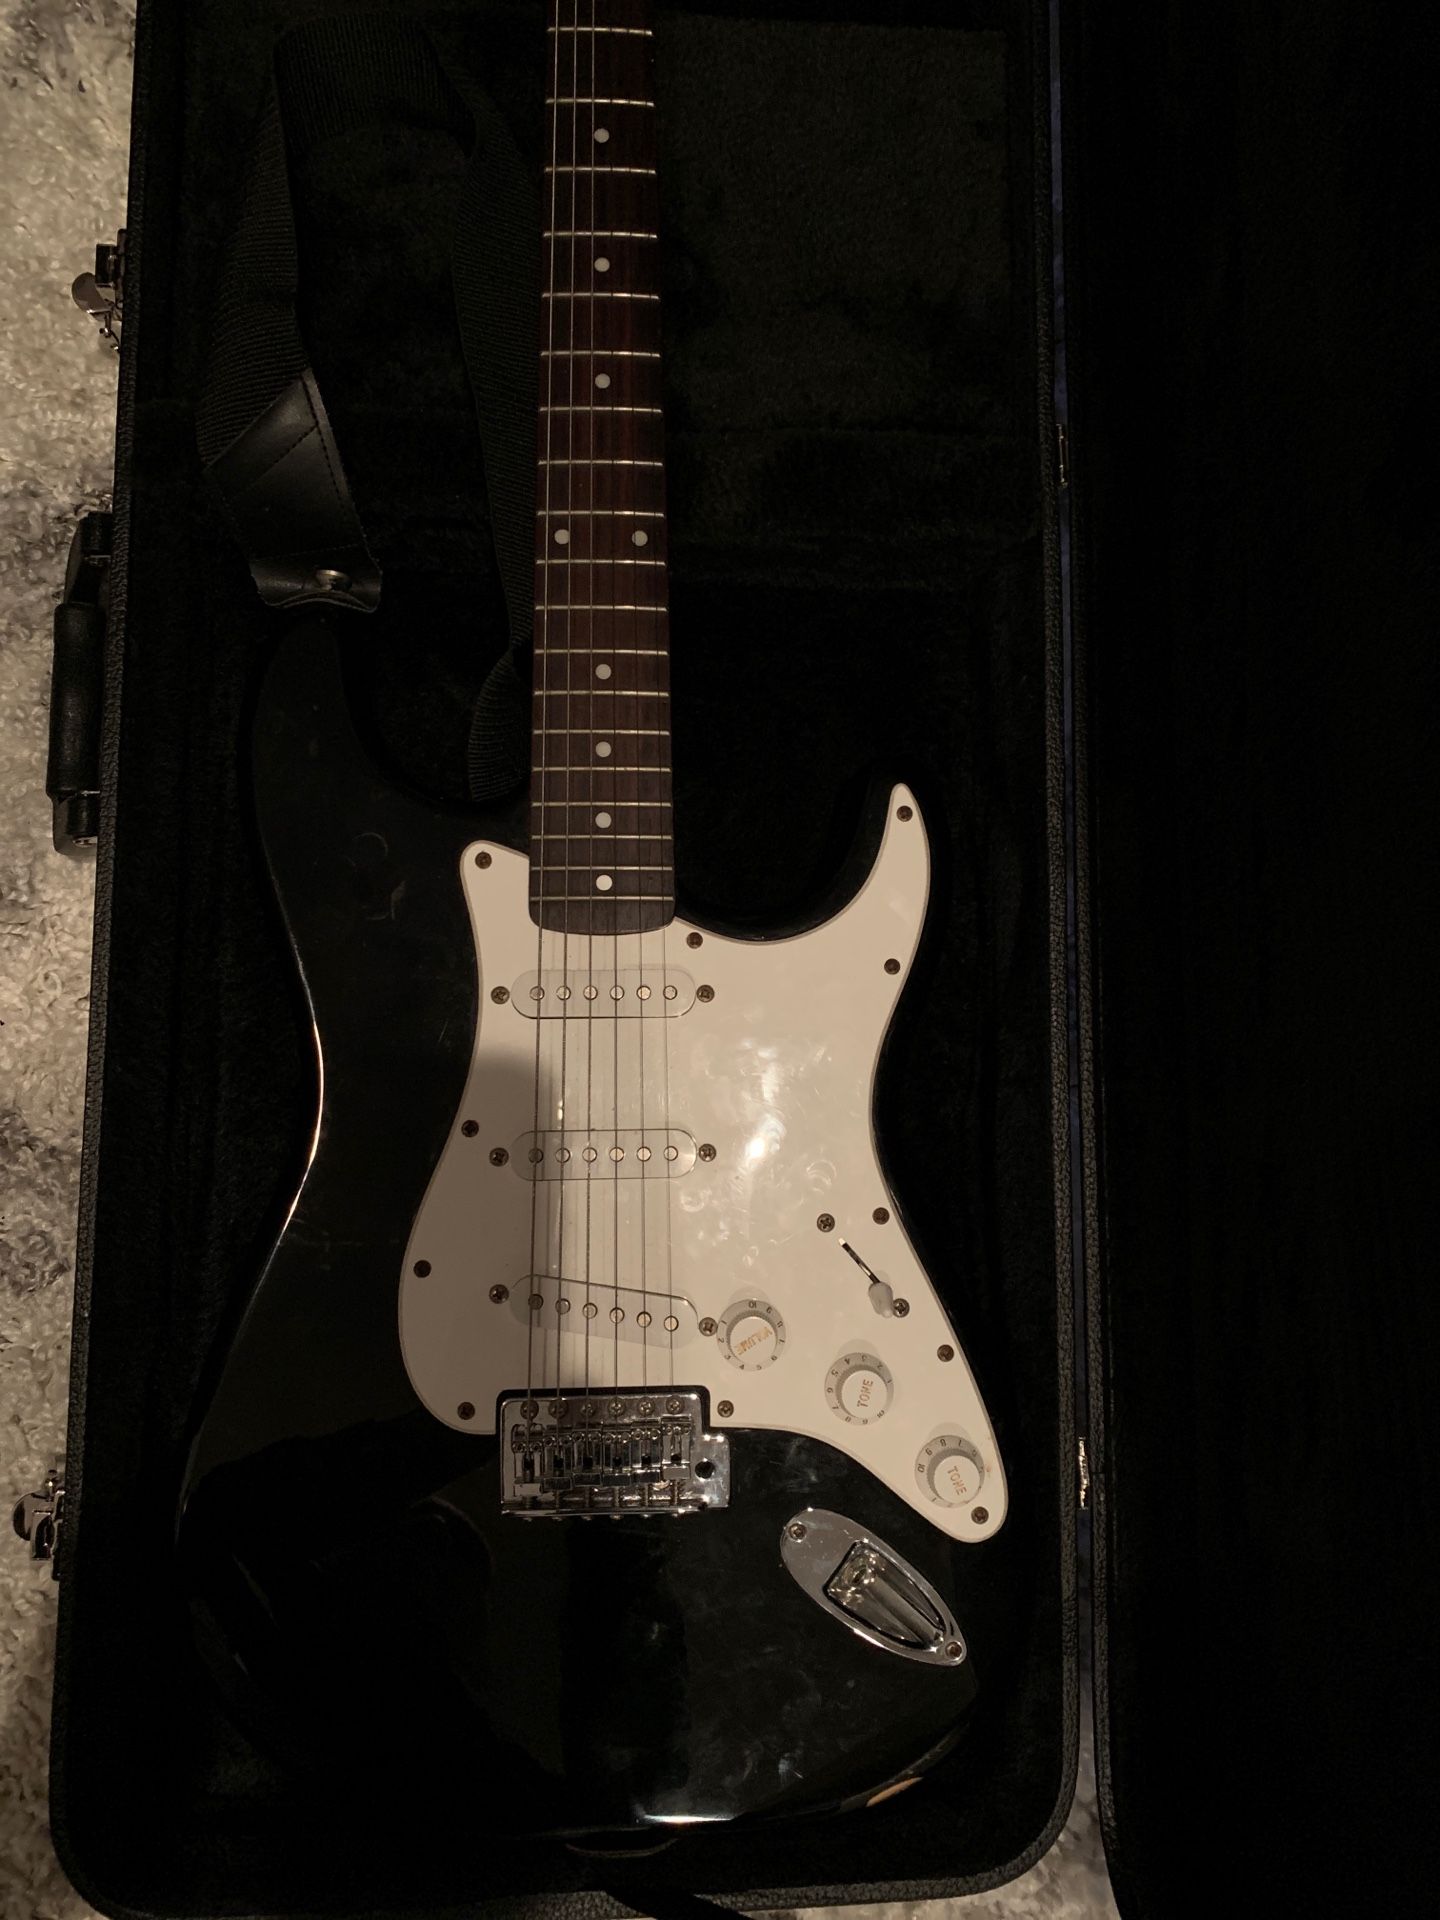 Fender Guitar and Hard-case